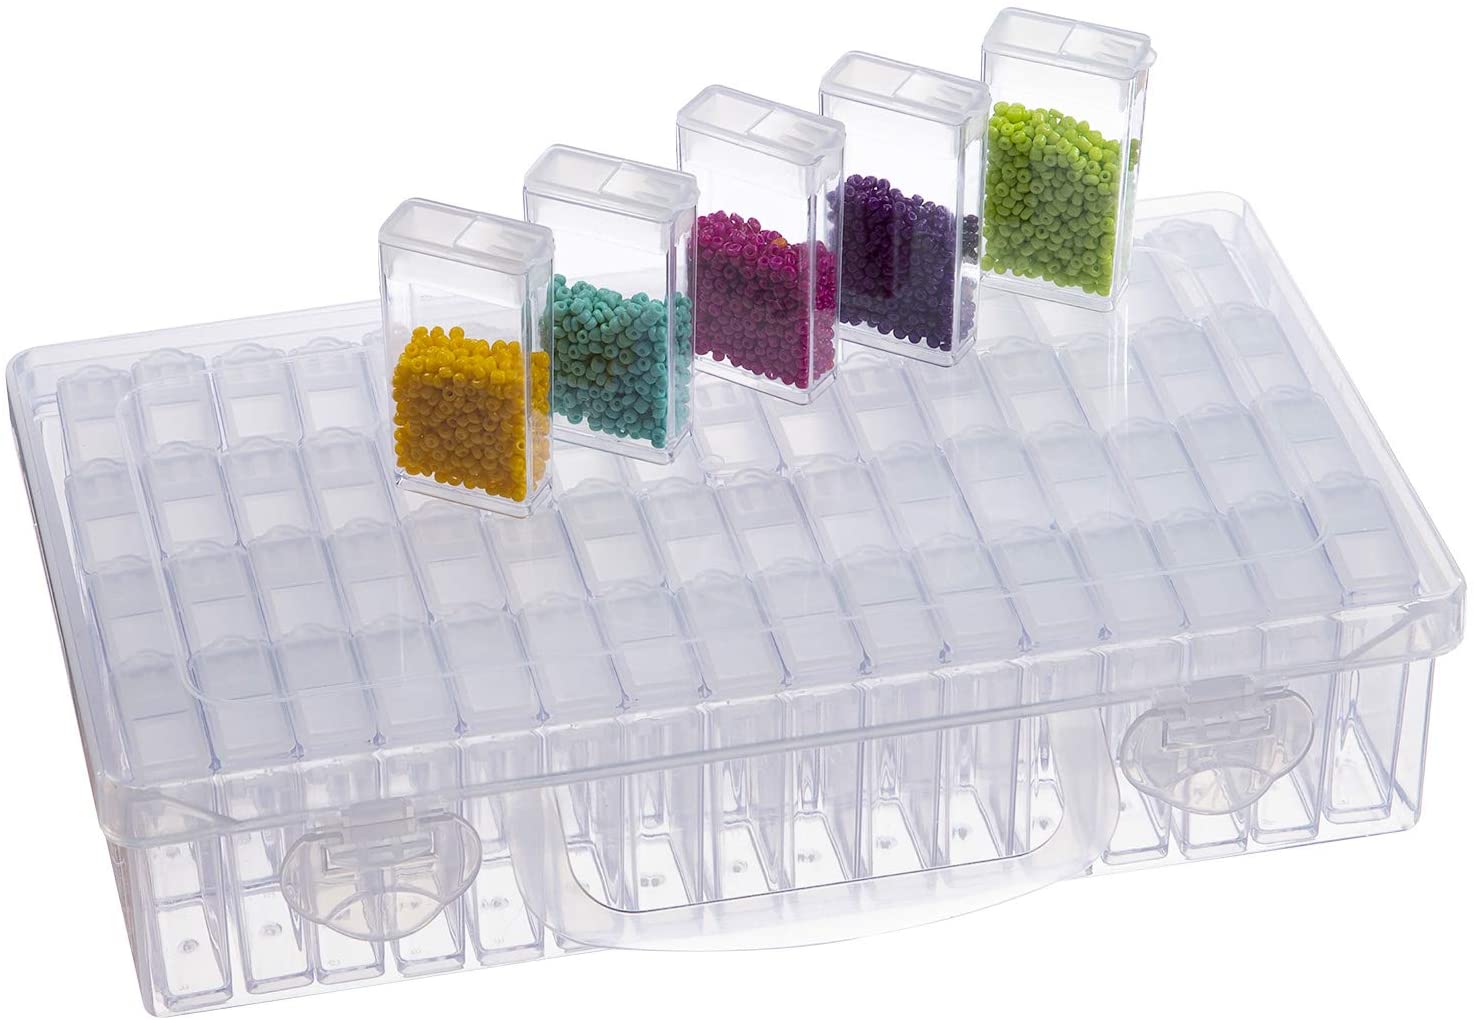 64 Grid Plastic Storage Box,Container Storage Clear Plastic